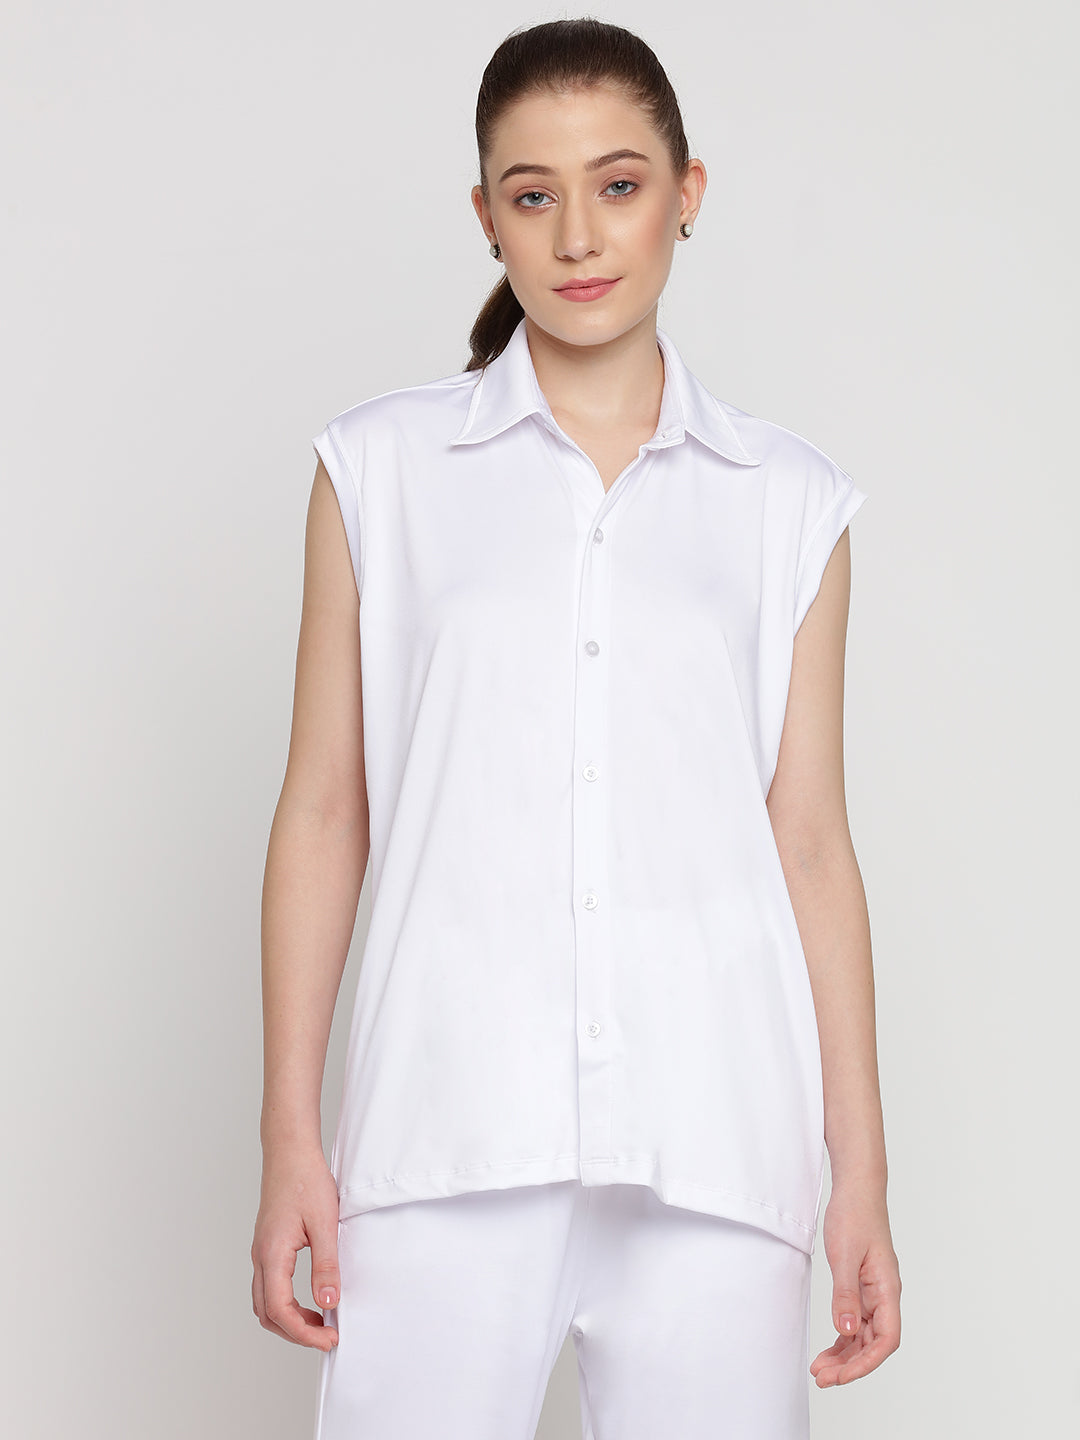 Zen Flow Shirt - White